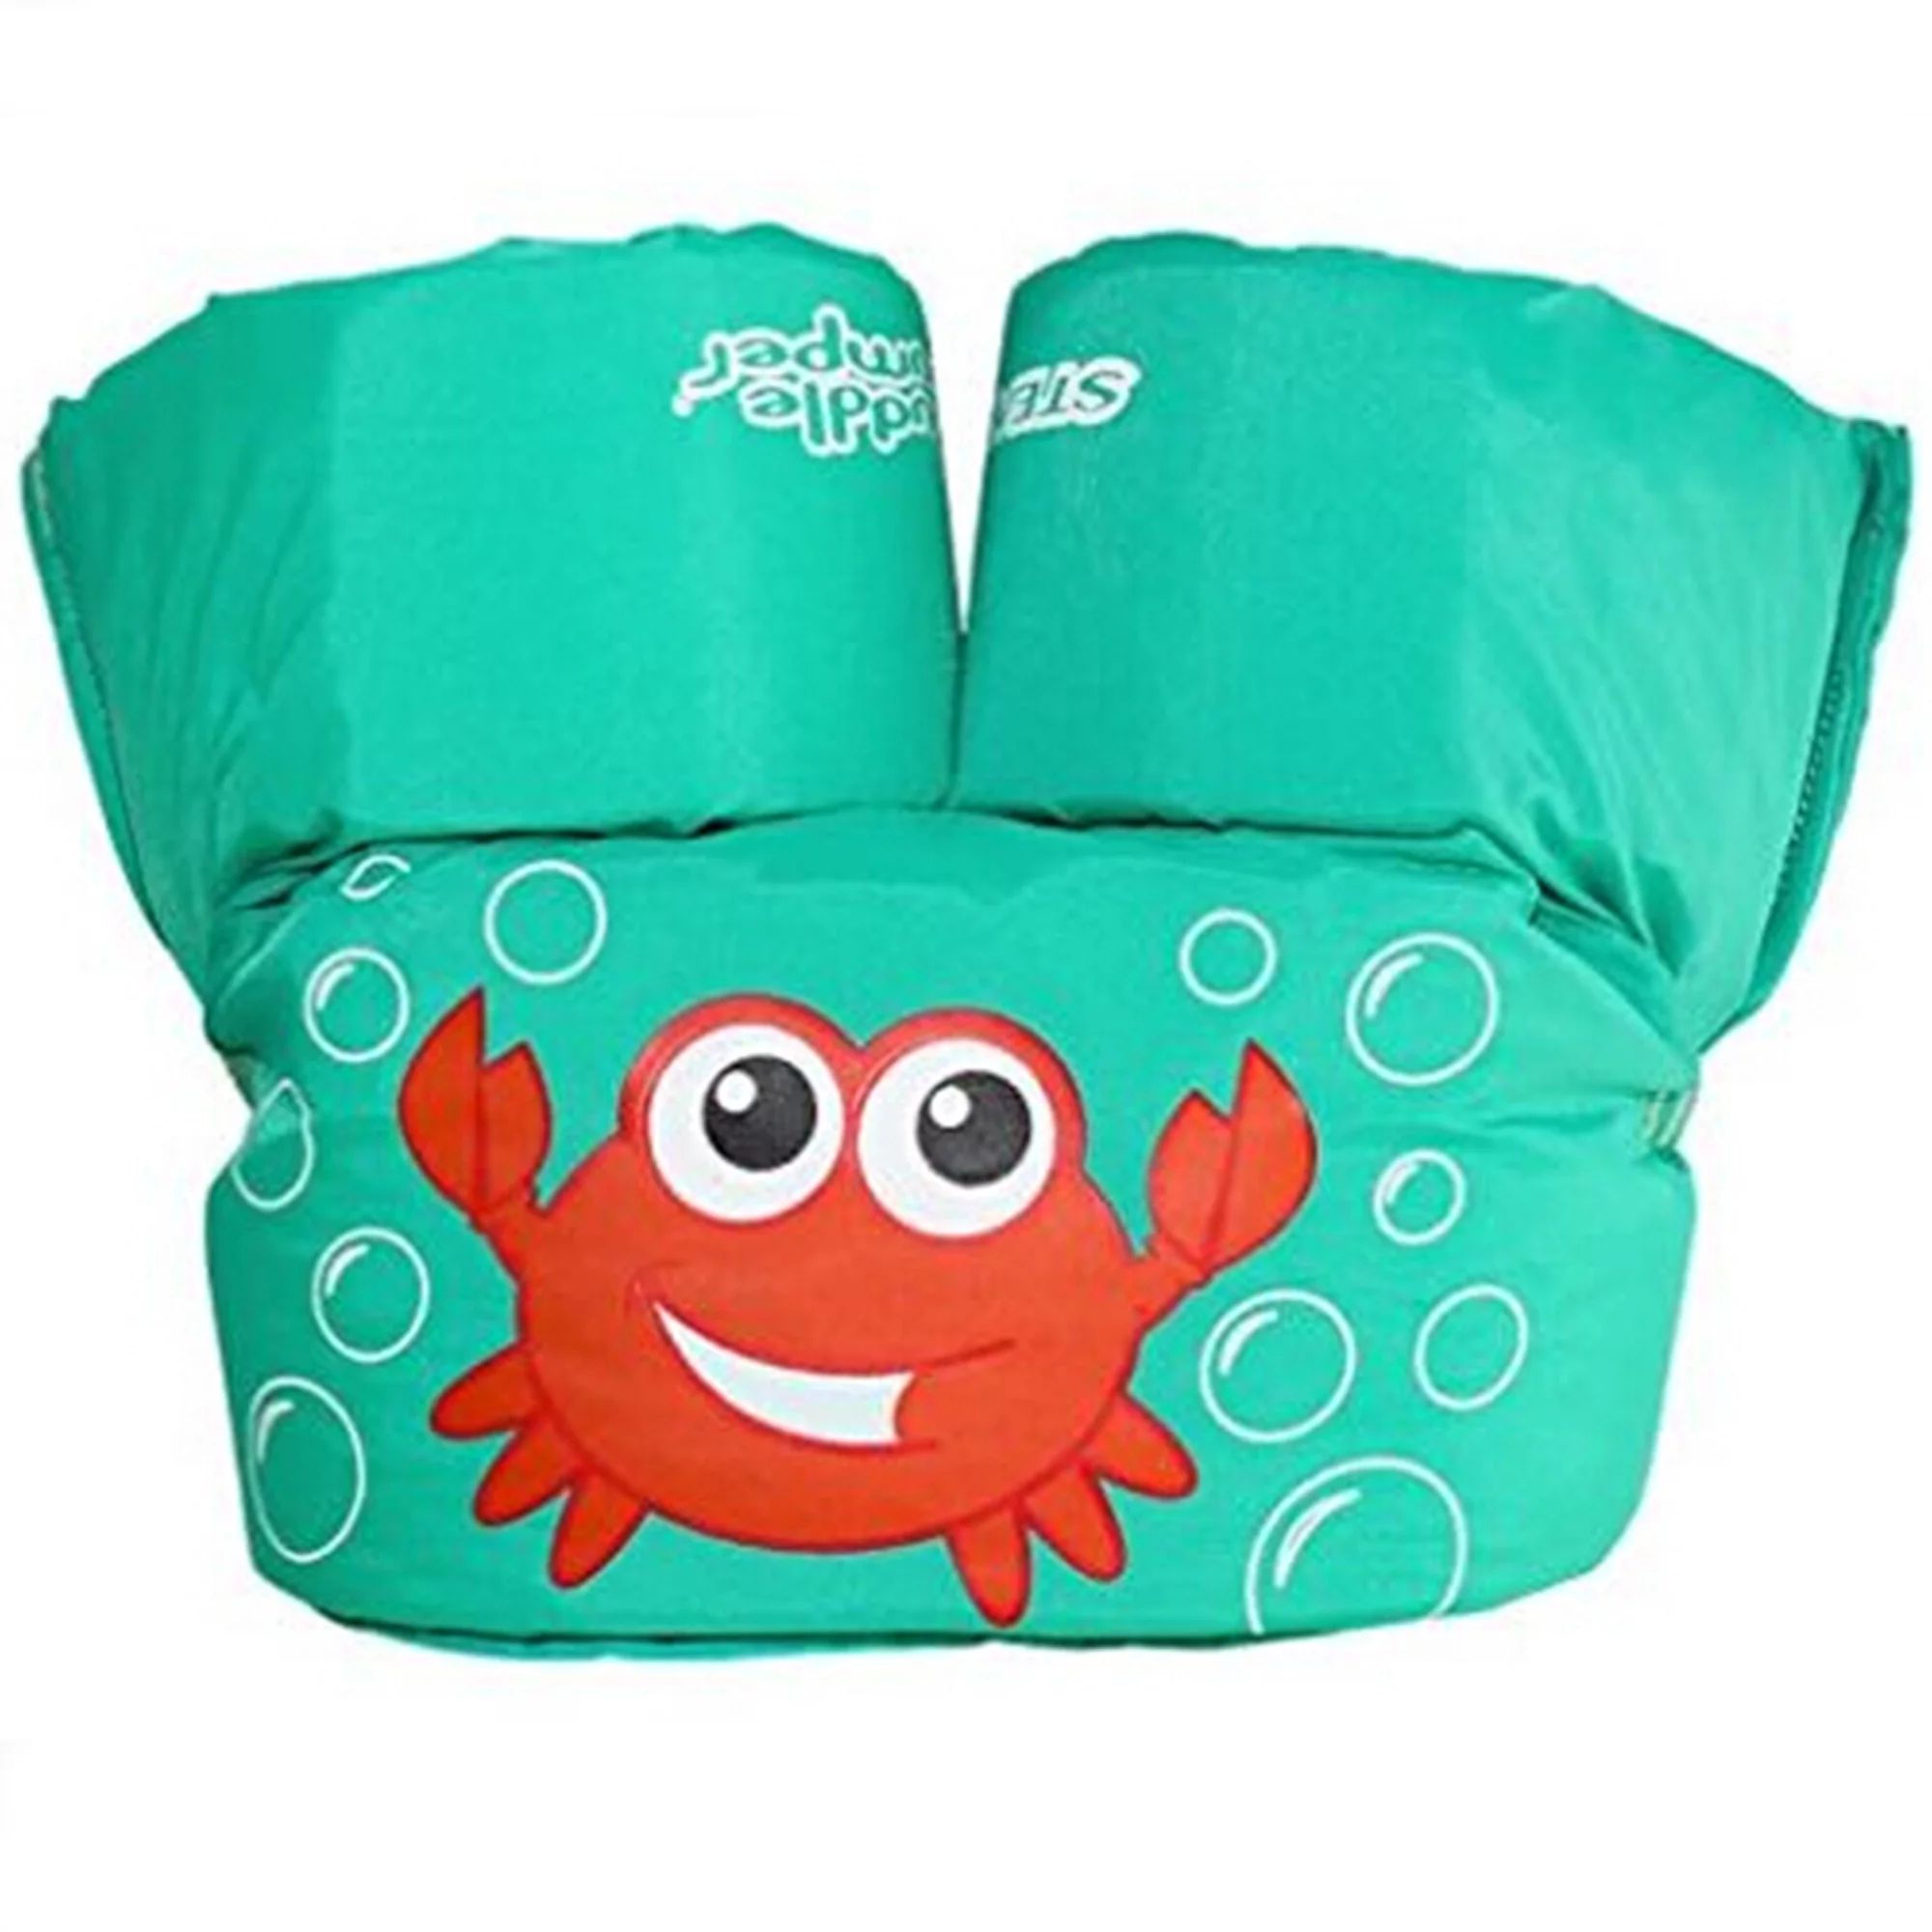 1pc Sealive Kids Swimming Puddle Jumper Basic Life Jacket Buoyancy Vest Baby Floating Suit Safety... | Walmart (US)